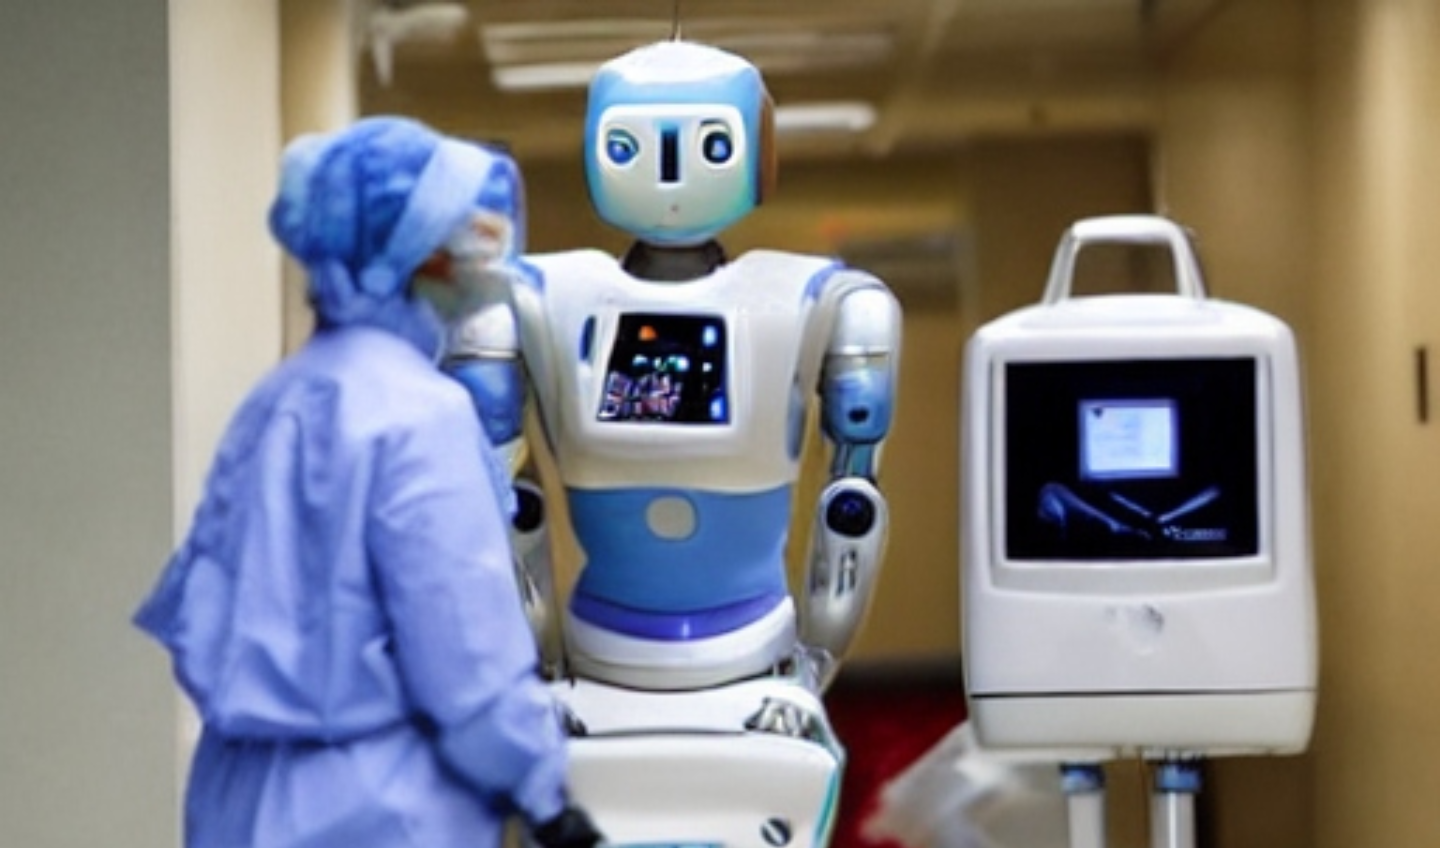 Robots in healthcare illustration